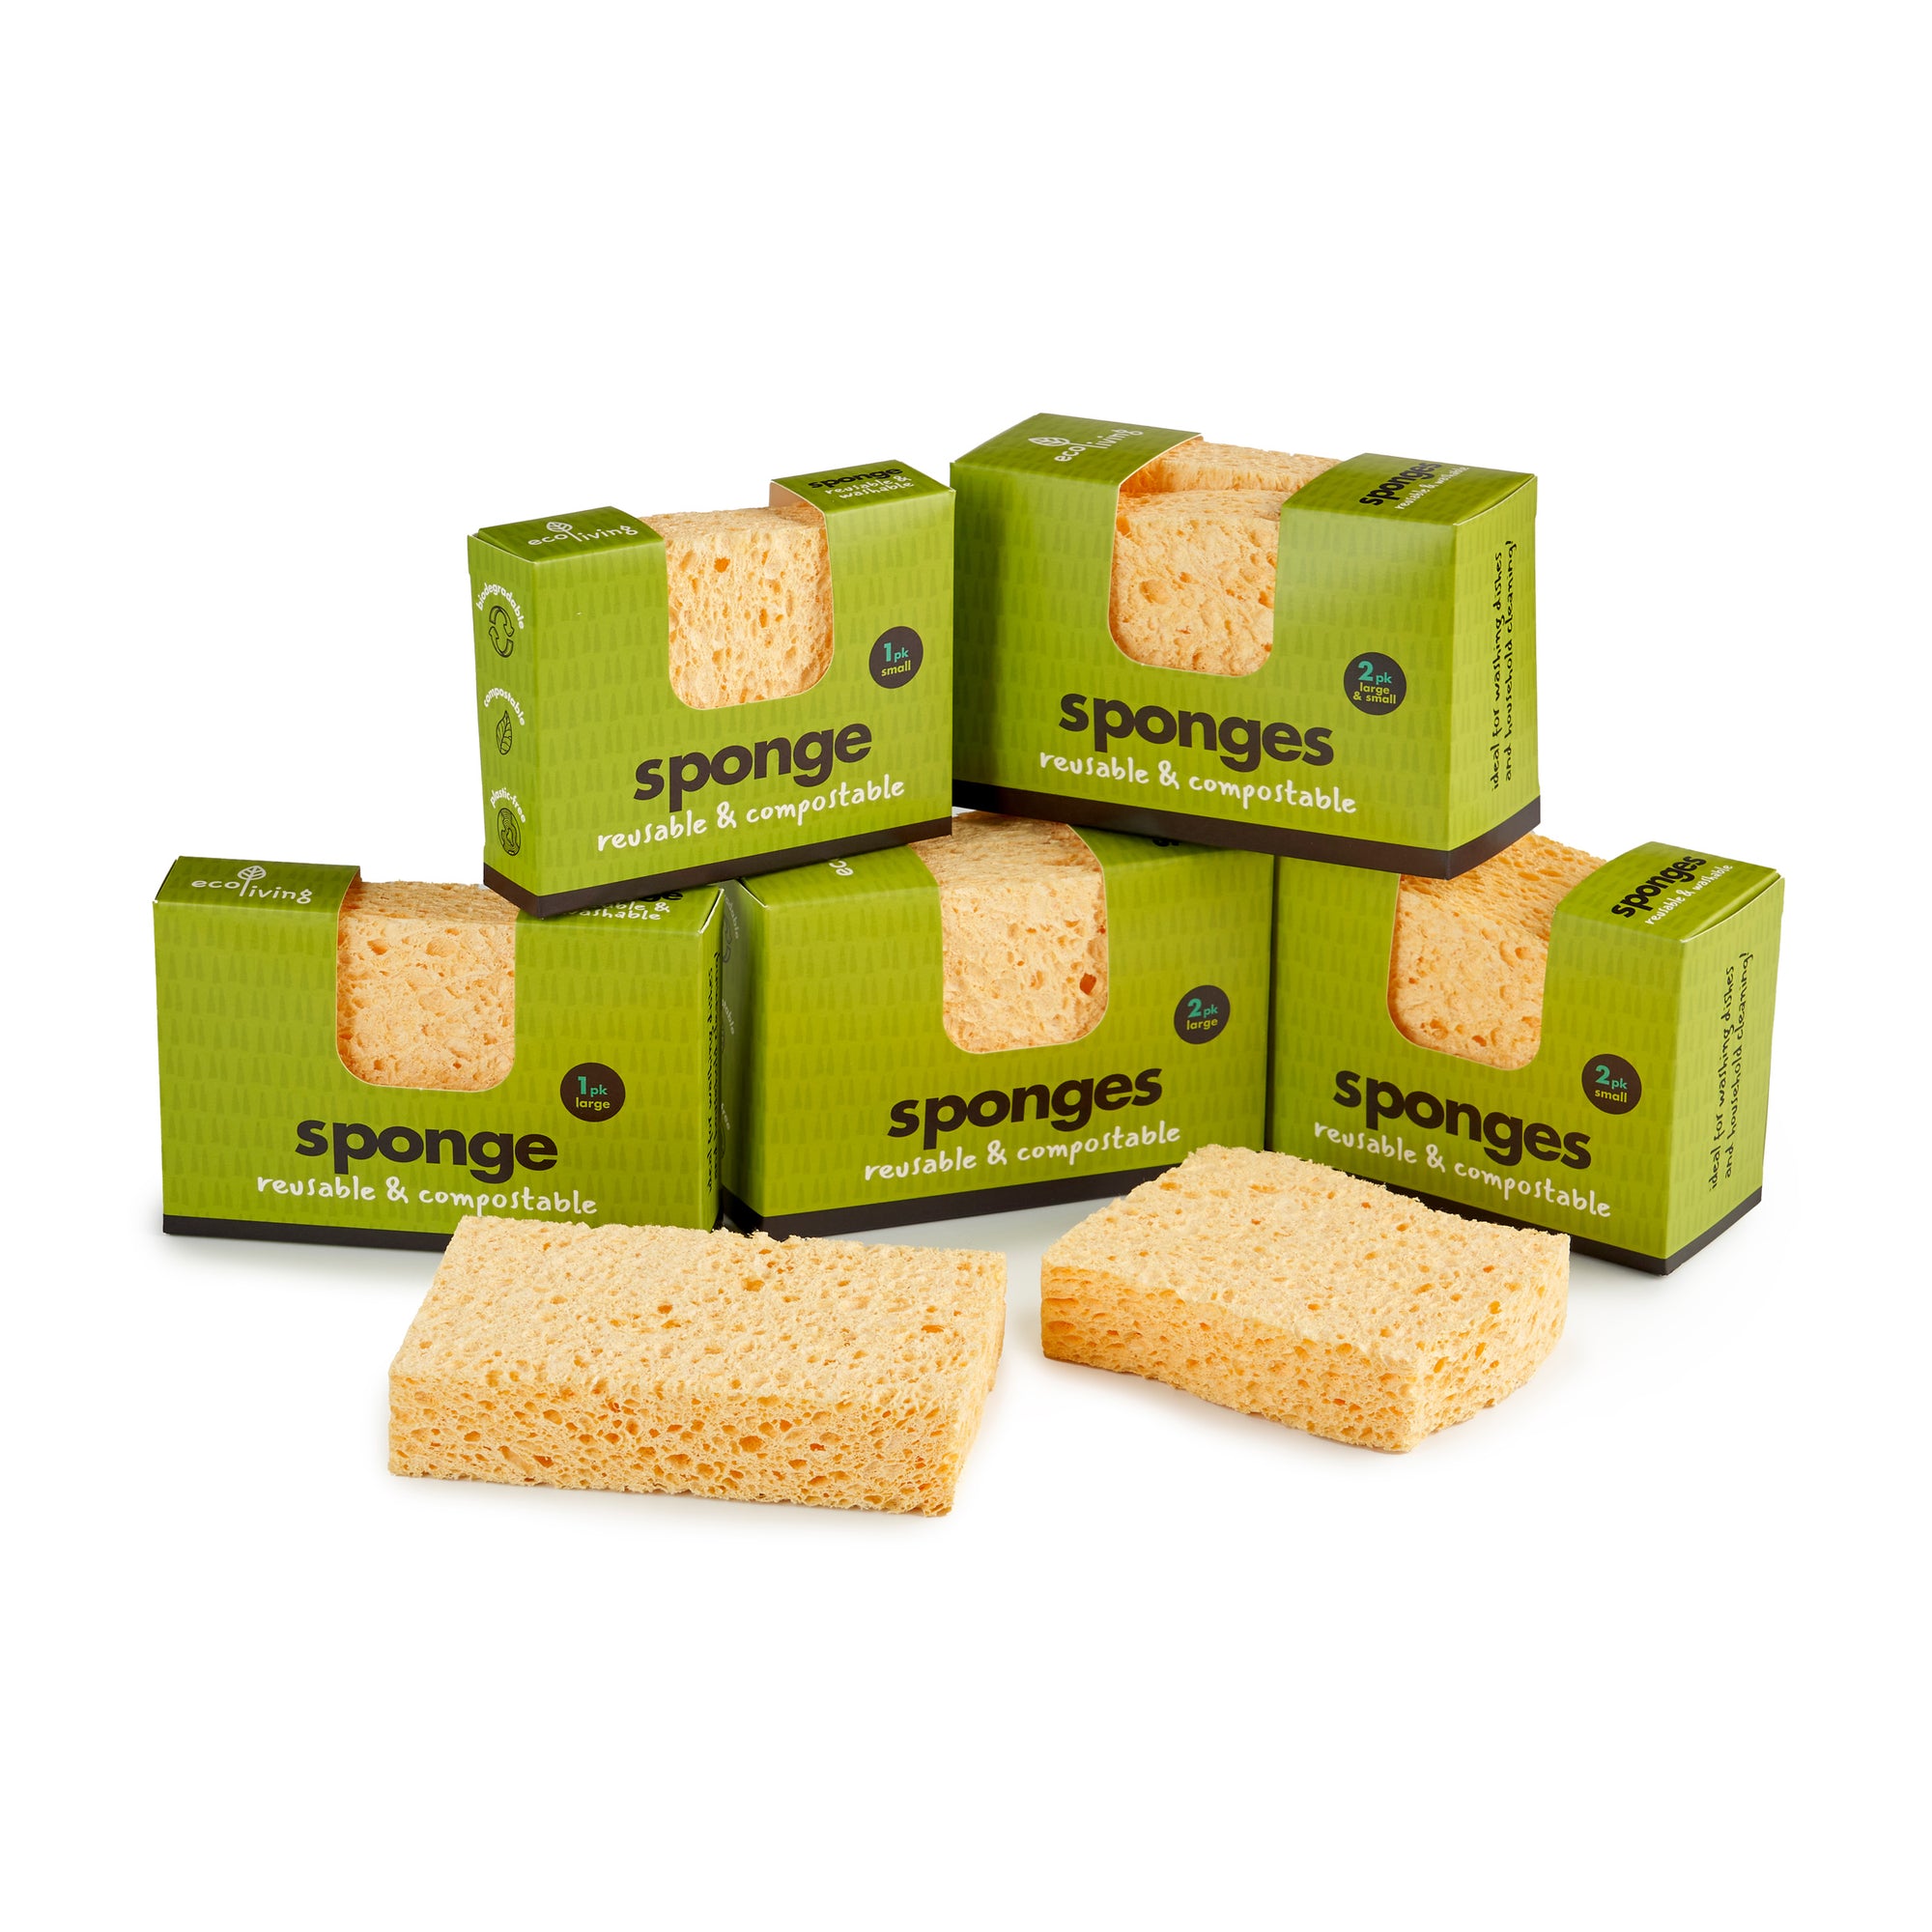 Compostable Cleaning Sponge - Larger Sponge x1 | Cleaning Sponge - The Naughty Shrew